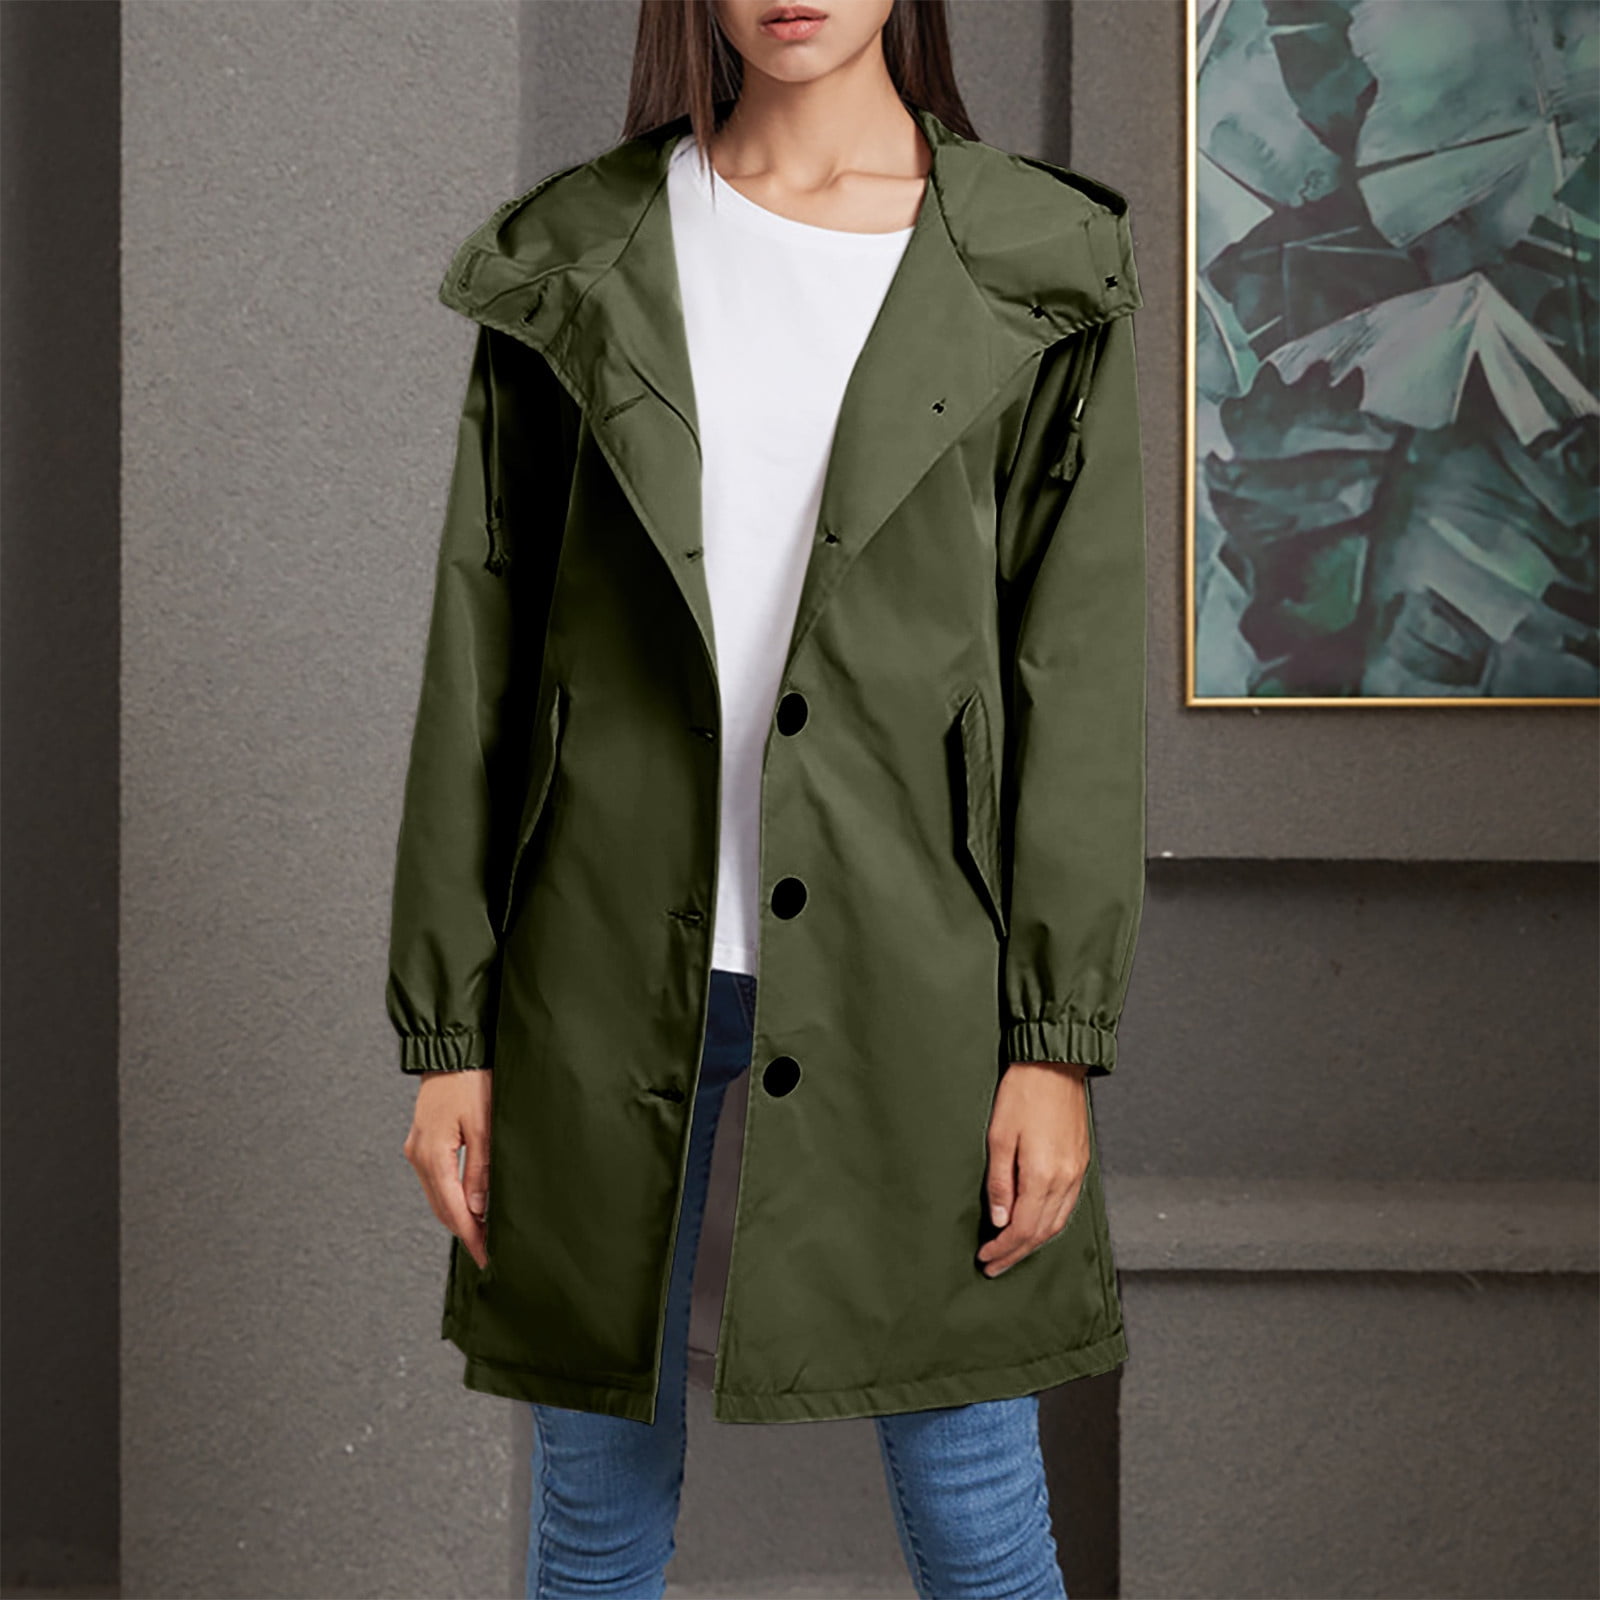  Bloggerlove Rain Jacket Women Lightweight Raincoat Waterproof  Windbreaker Striped Climbing Outdoor Hooded Trench Coats S-XXL : Clothing